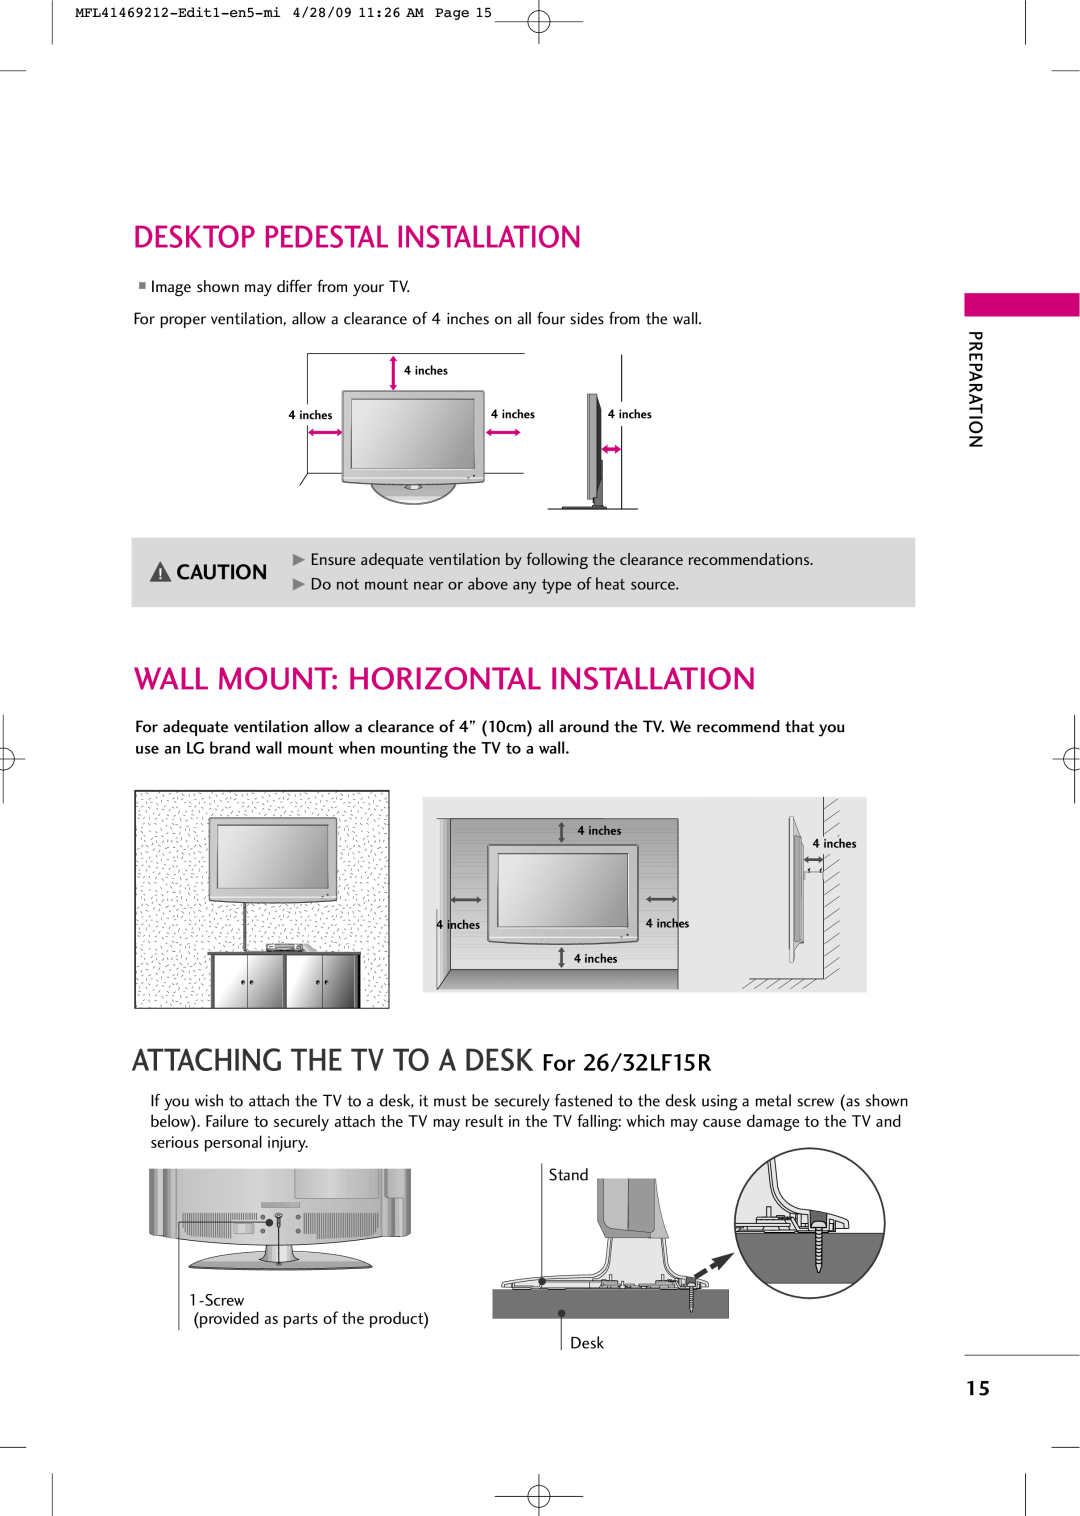 LG Electronics 2230R-MA manual Desktop Pedestal Installation, Wall Mount Horizontal Installation 